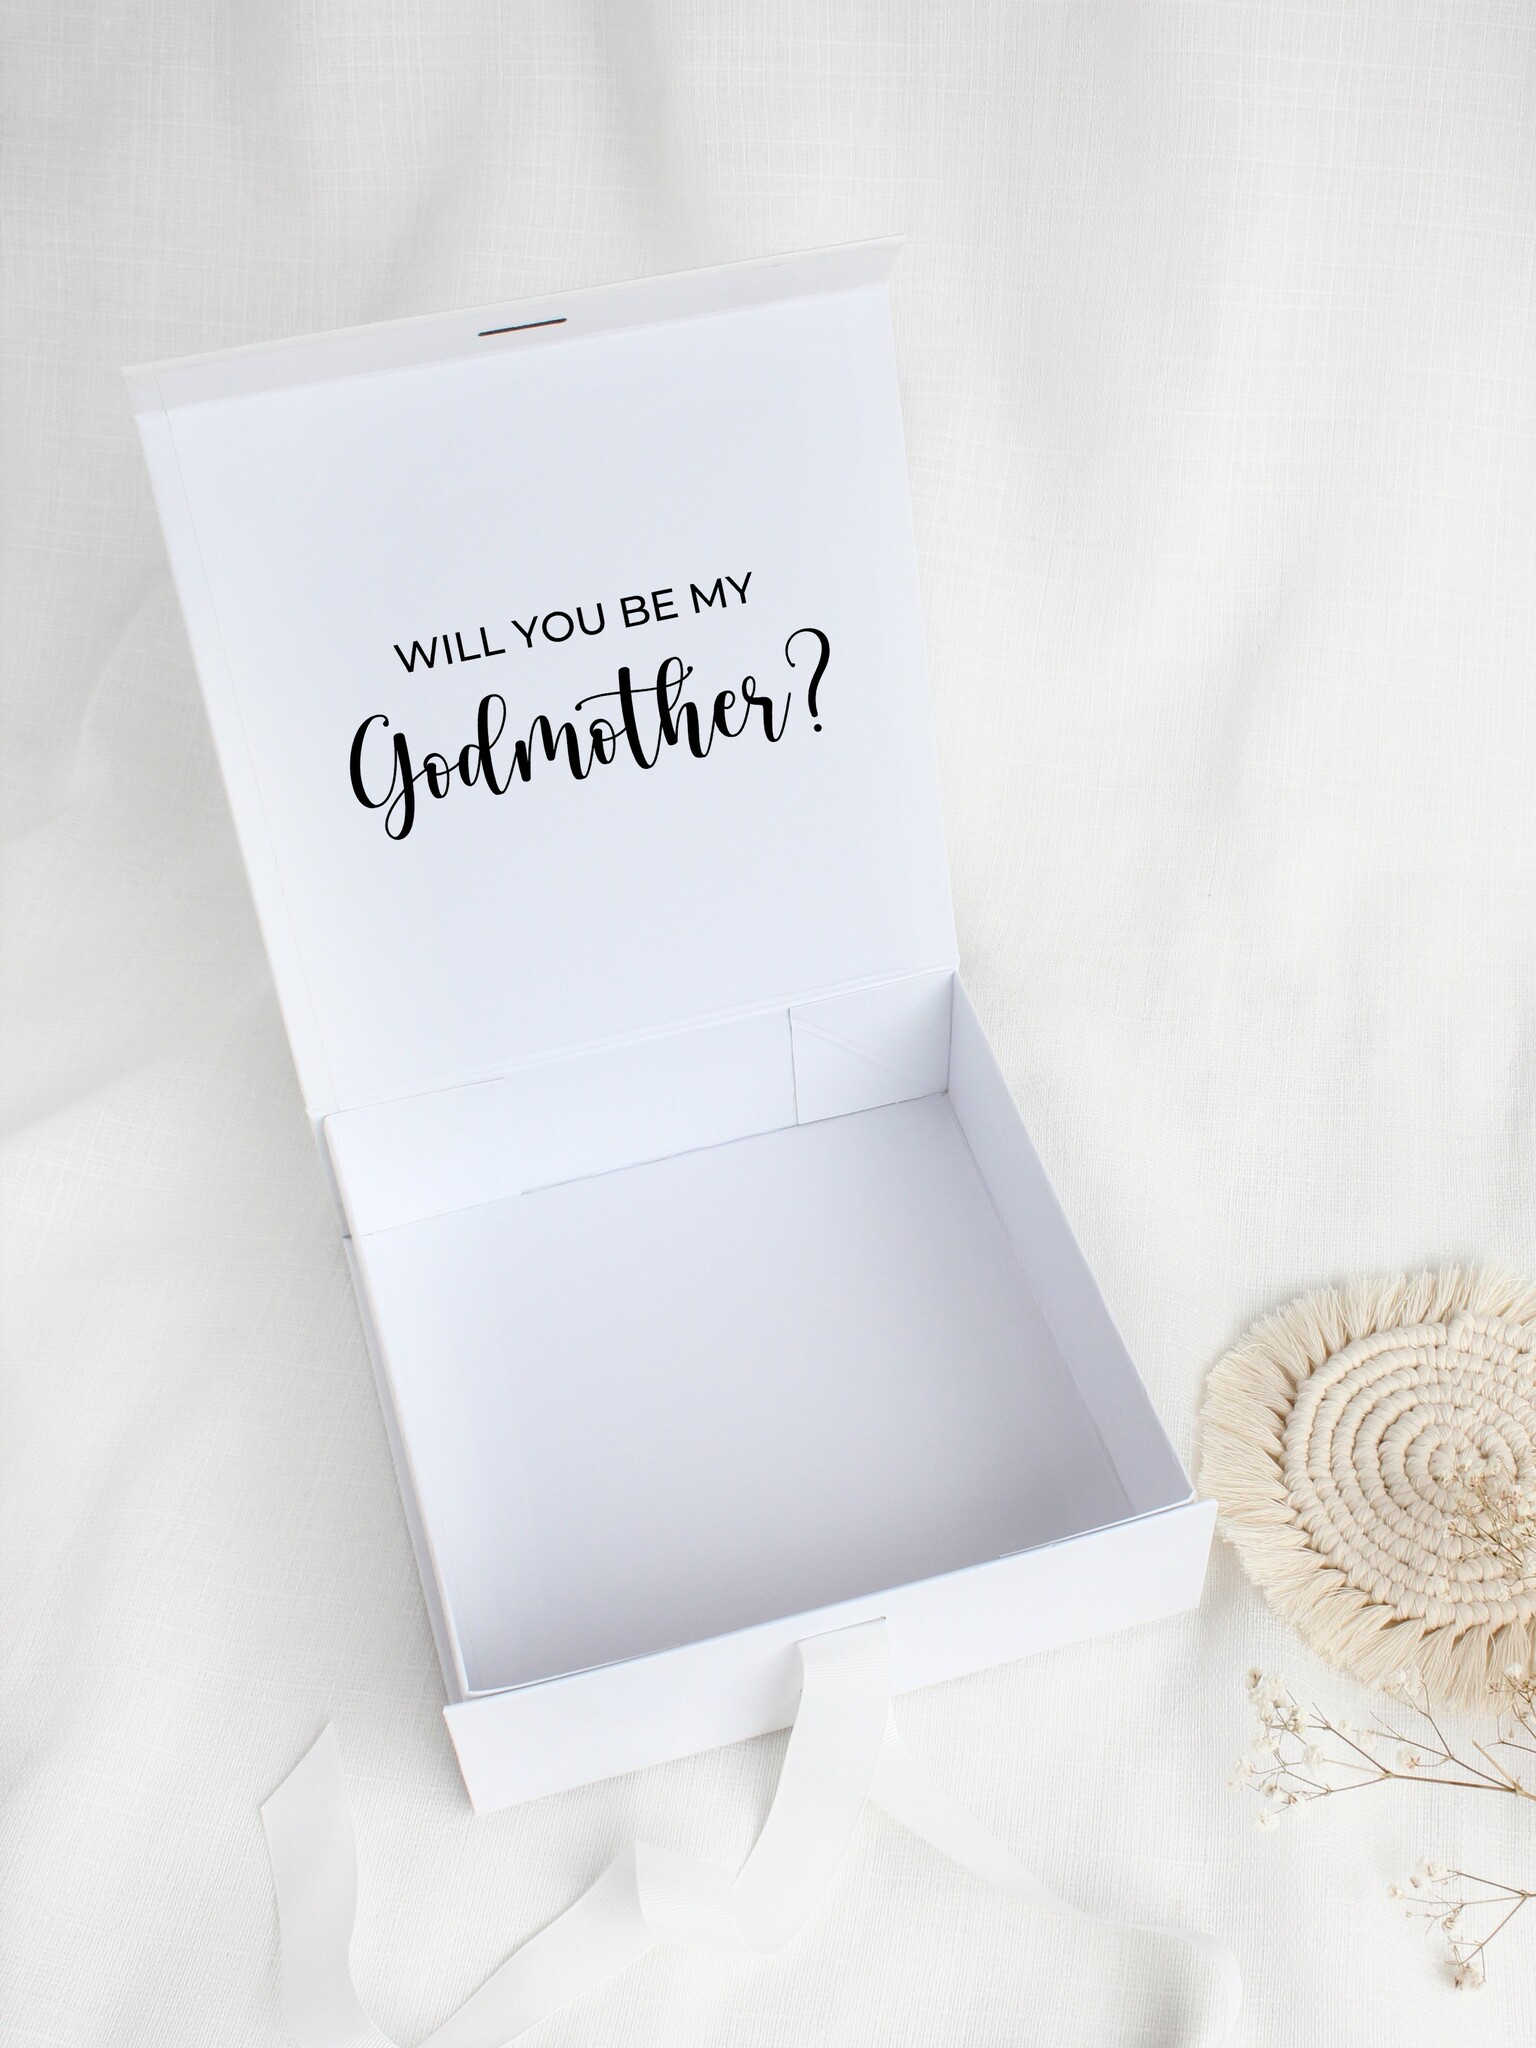 Presentbox Godmother Proposal